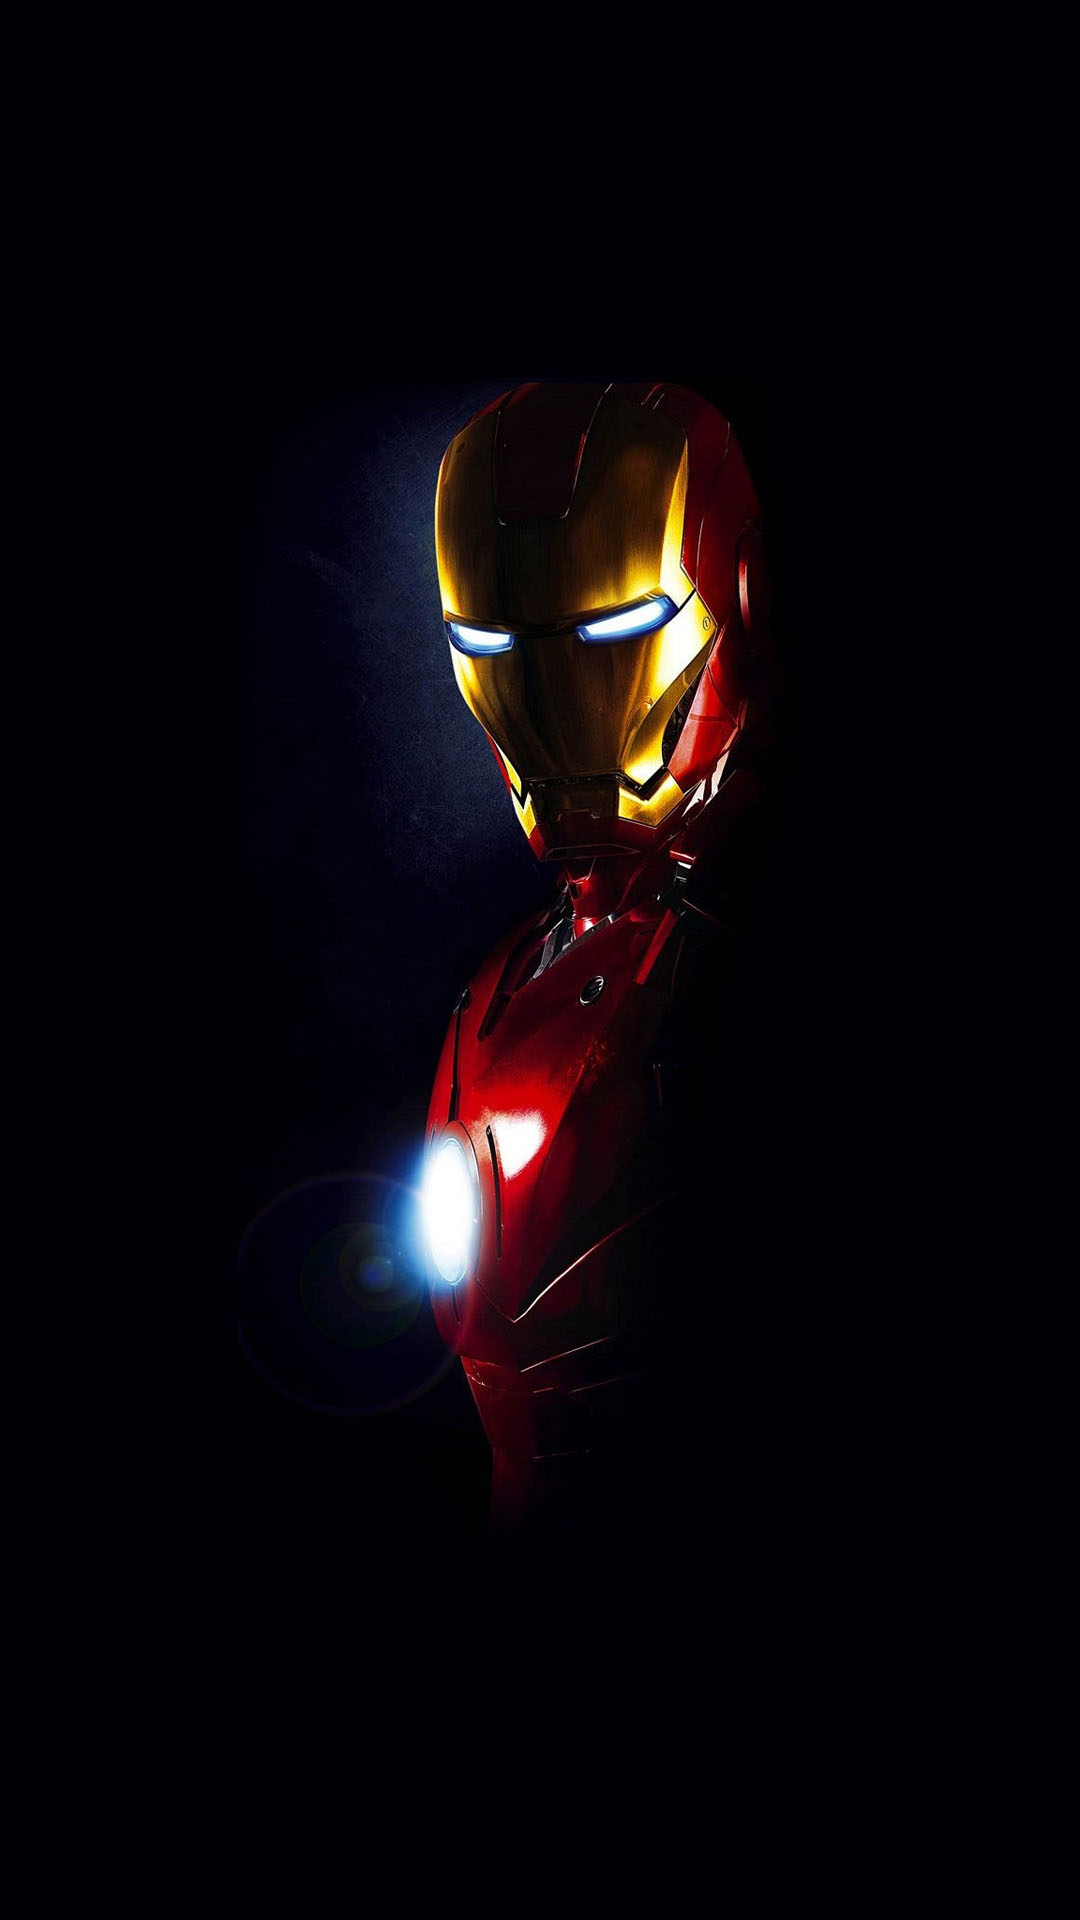 Xperia Z1 Wallpaper Iron Man Android